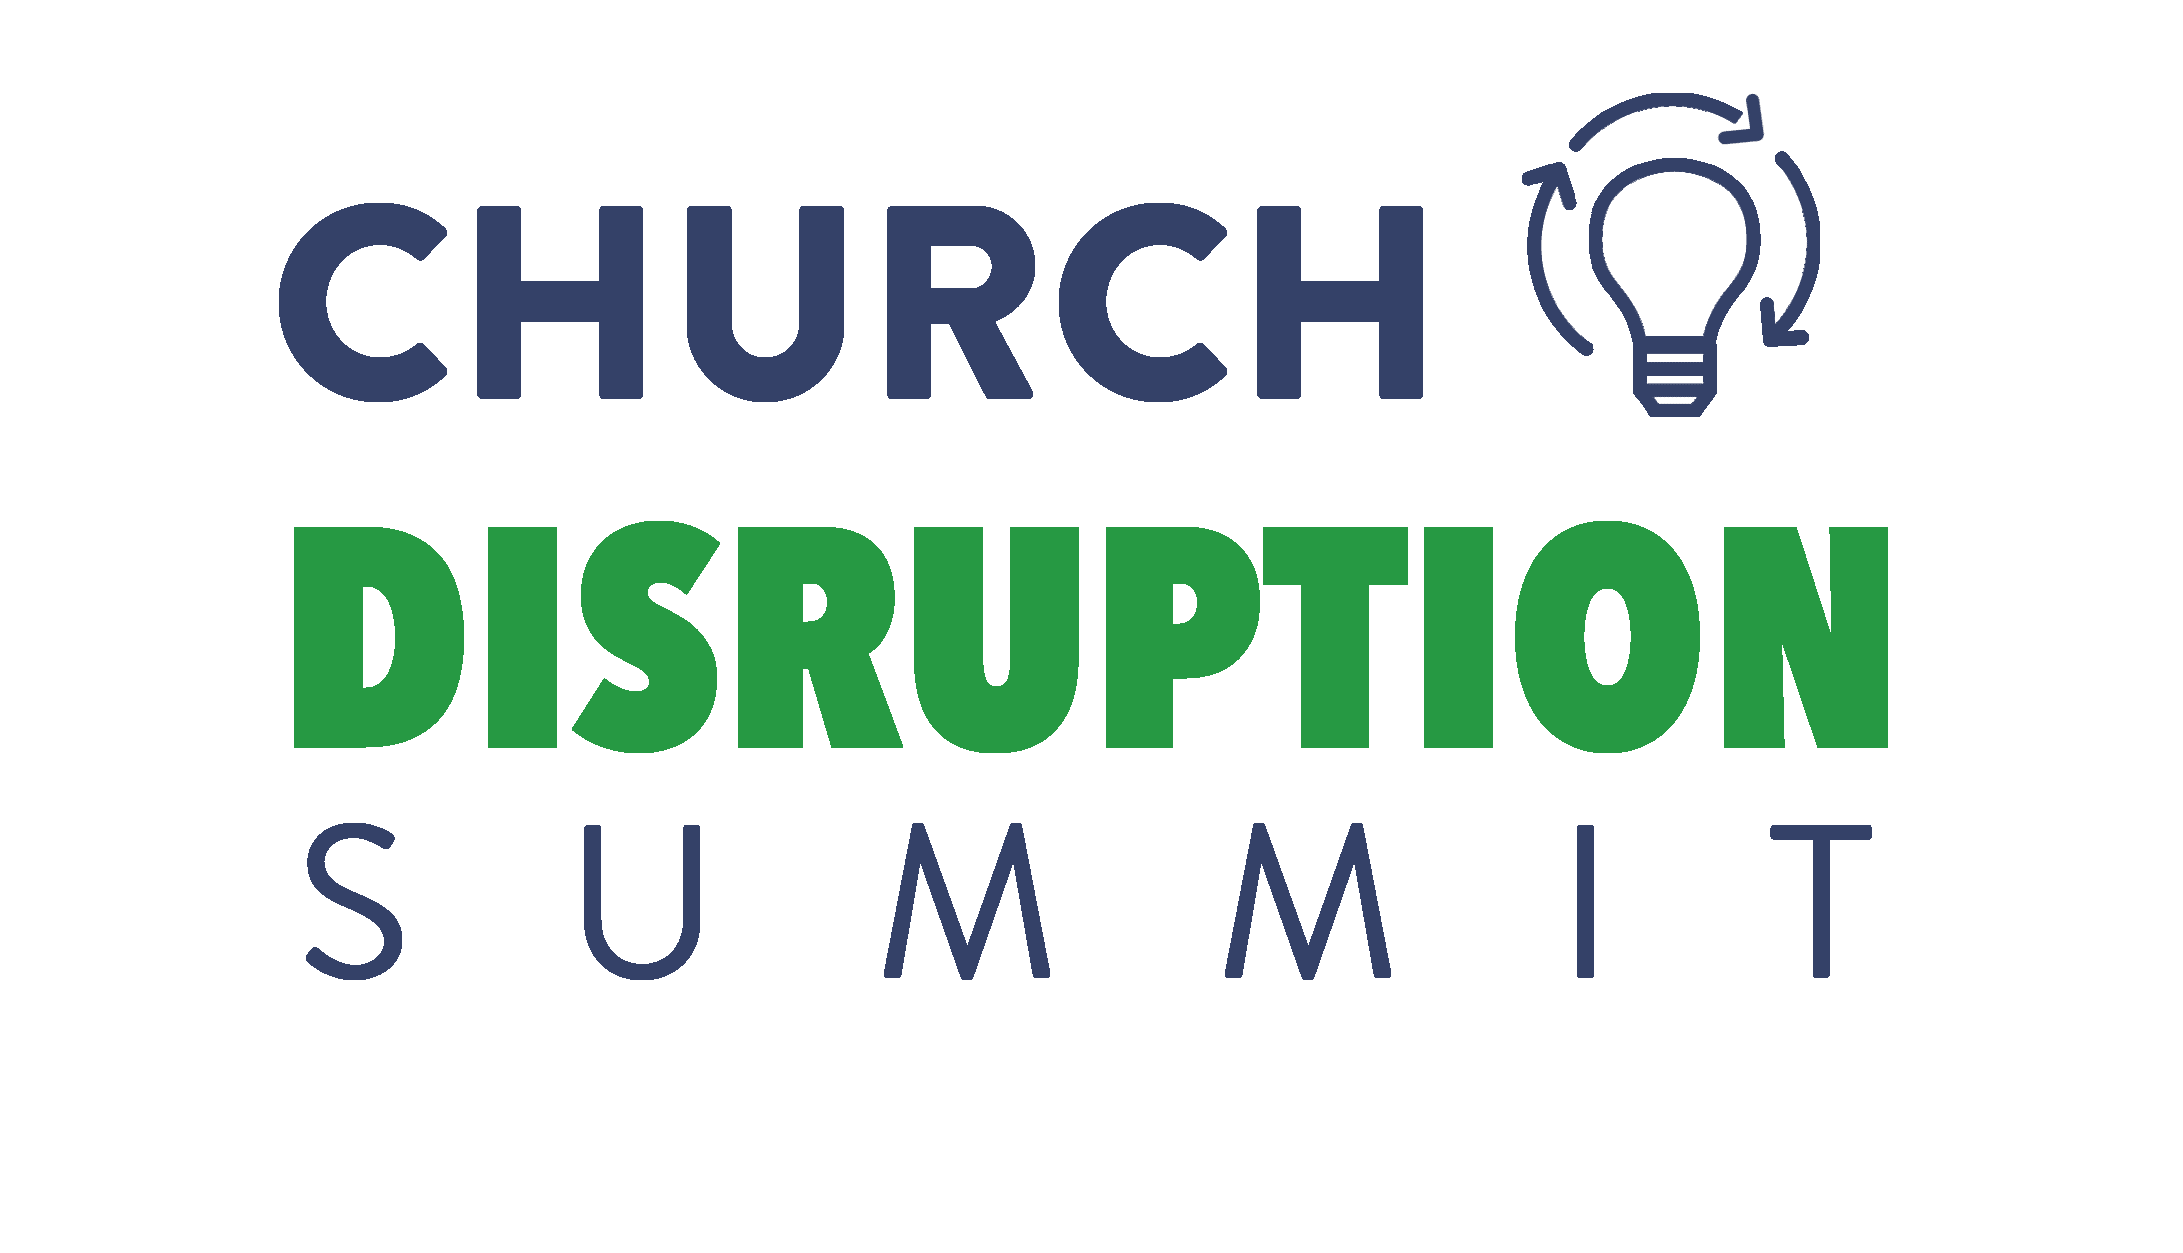 Church Disruption Summit